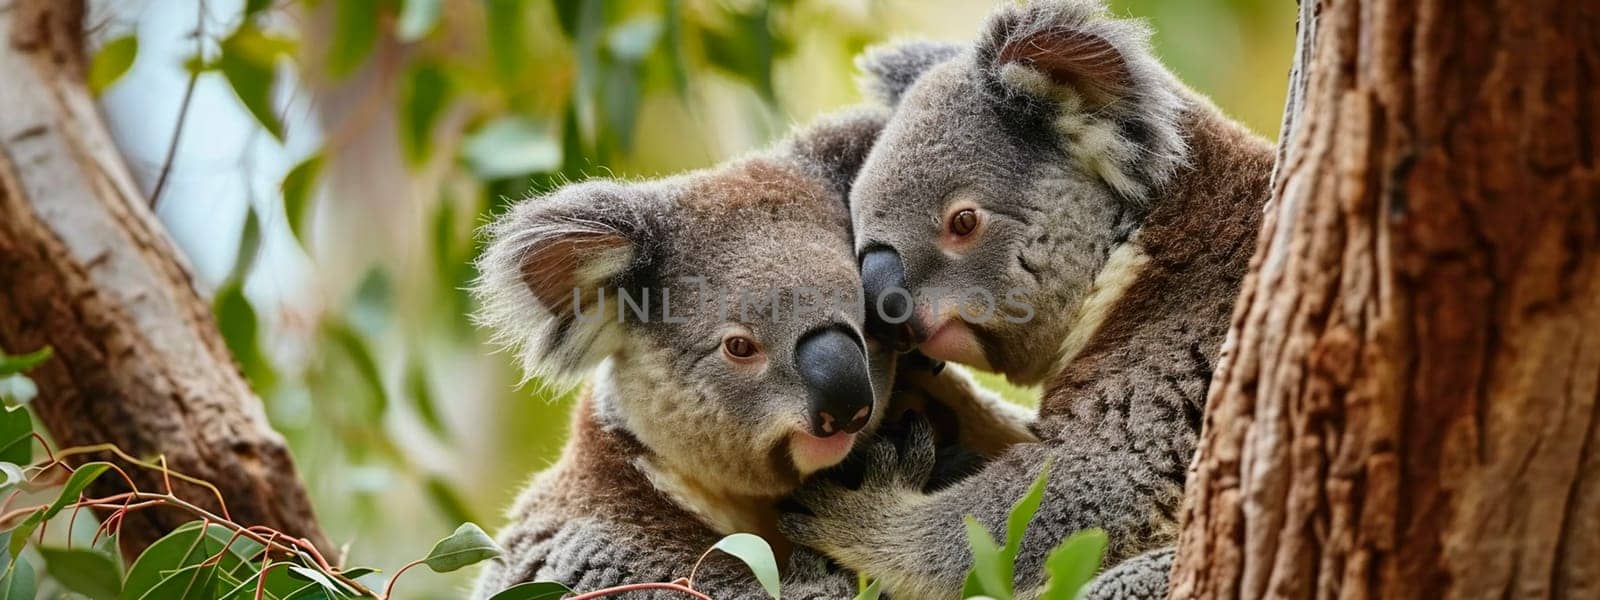 portrait of a koala in the wild. Selective focus. animal.